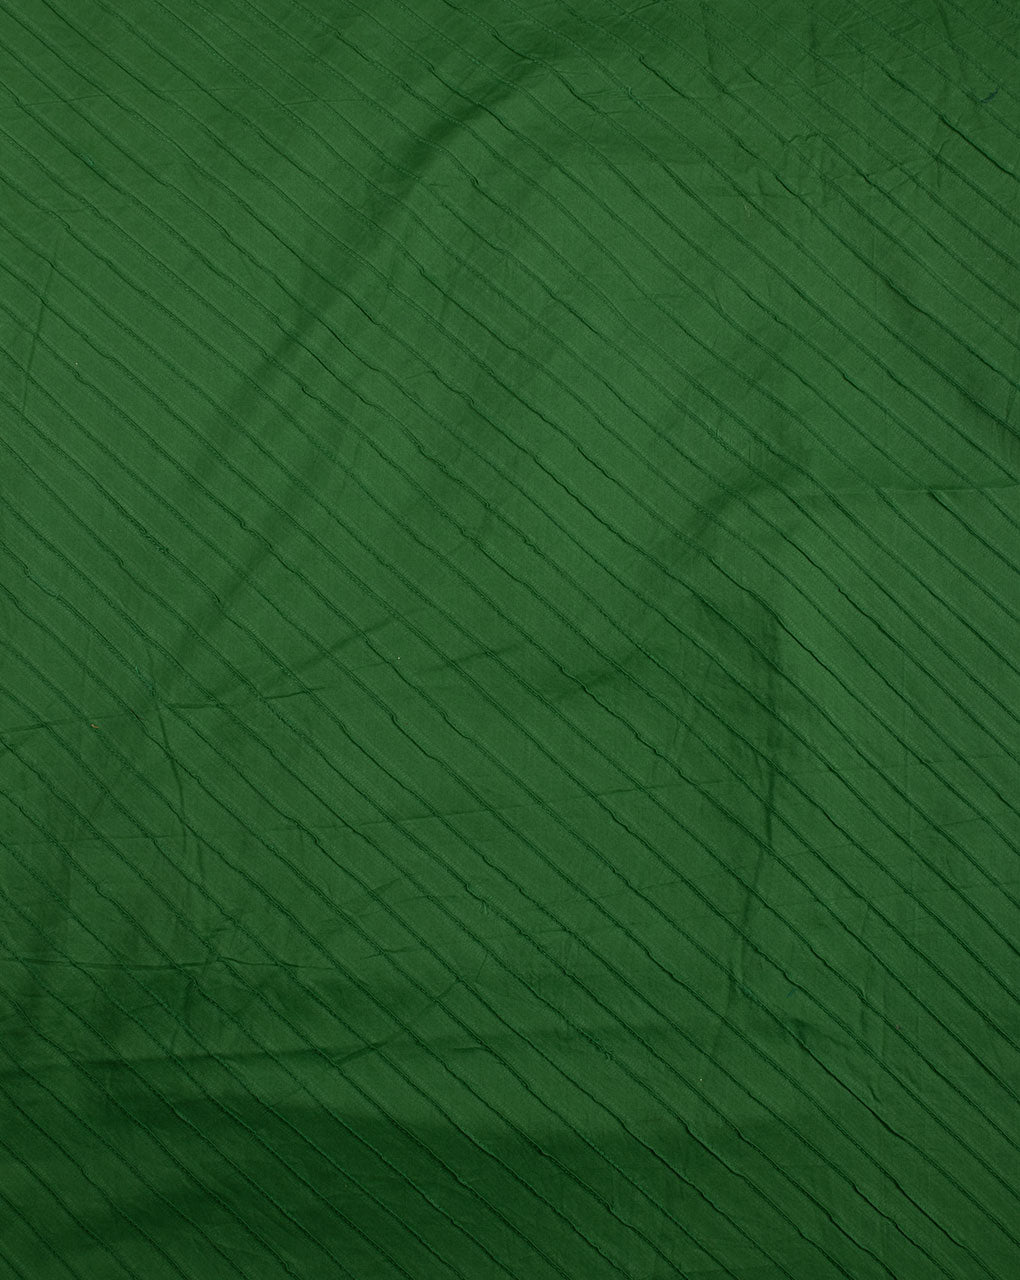 Green Pin-Tucks Cotton Fabric ( Width 40 Inch ) - Fabriclore.com